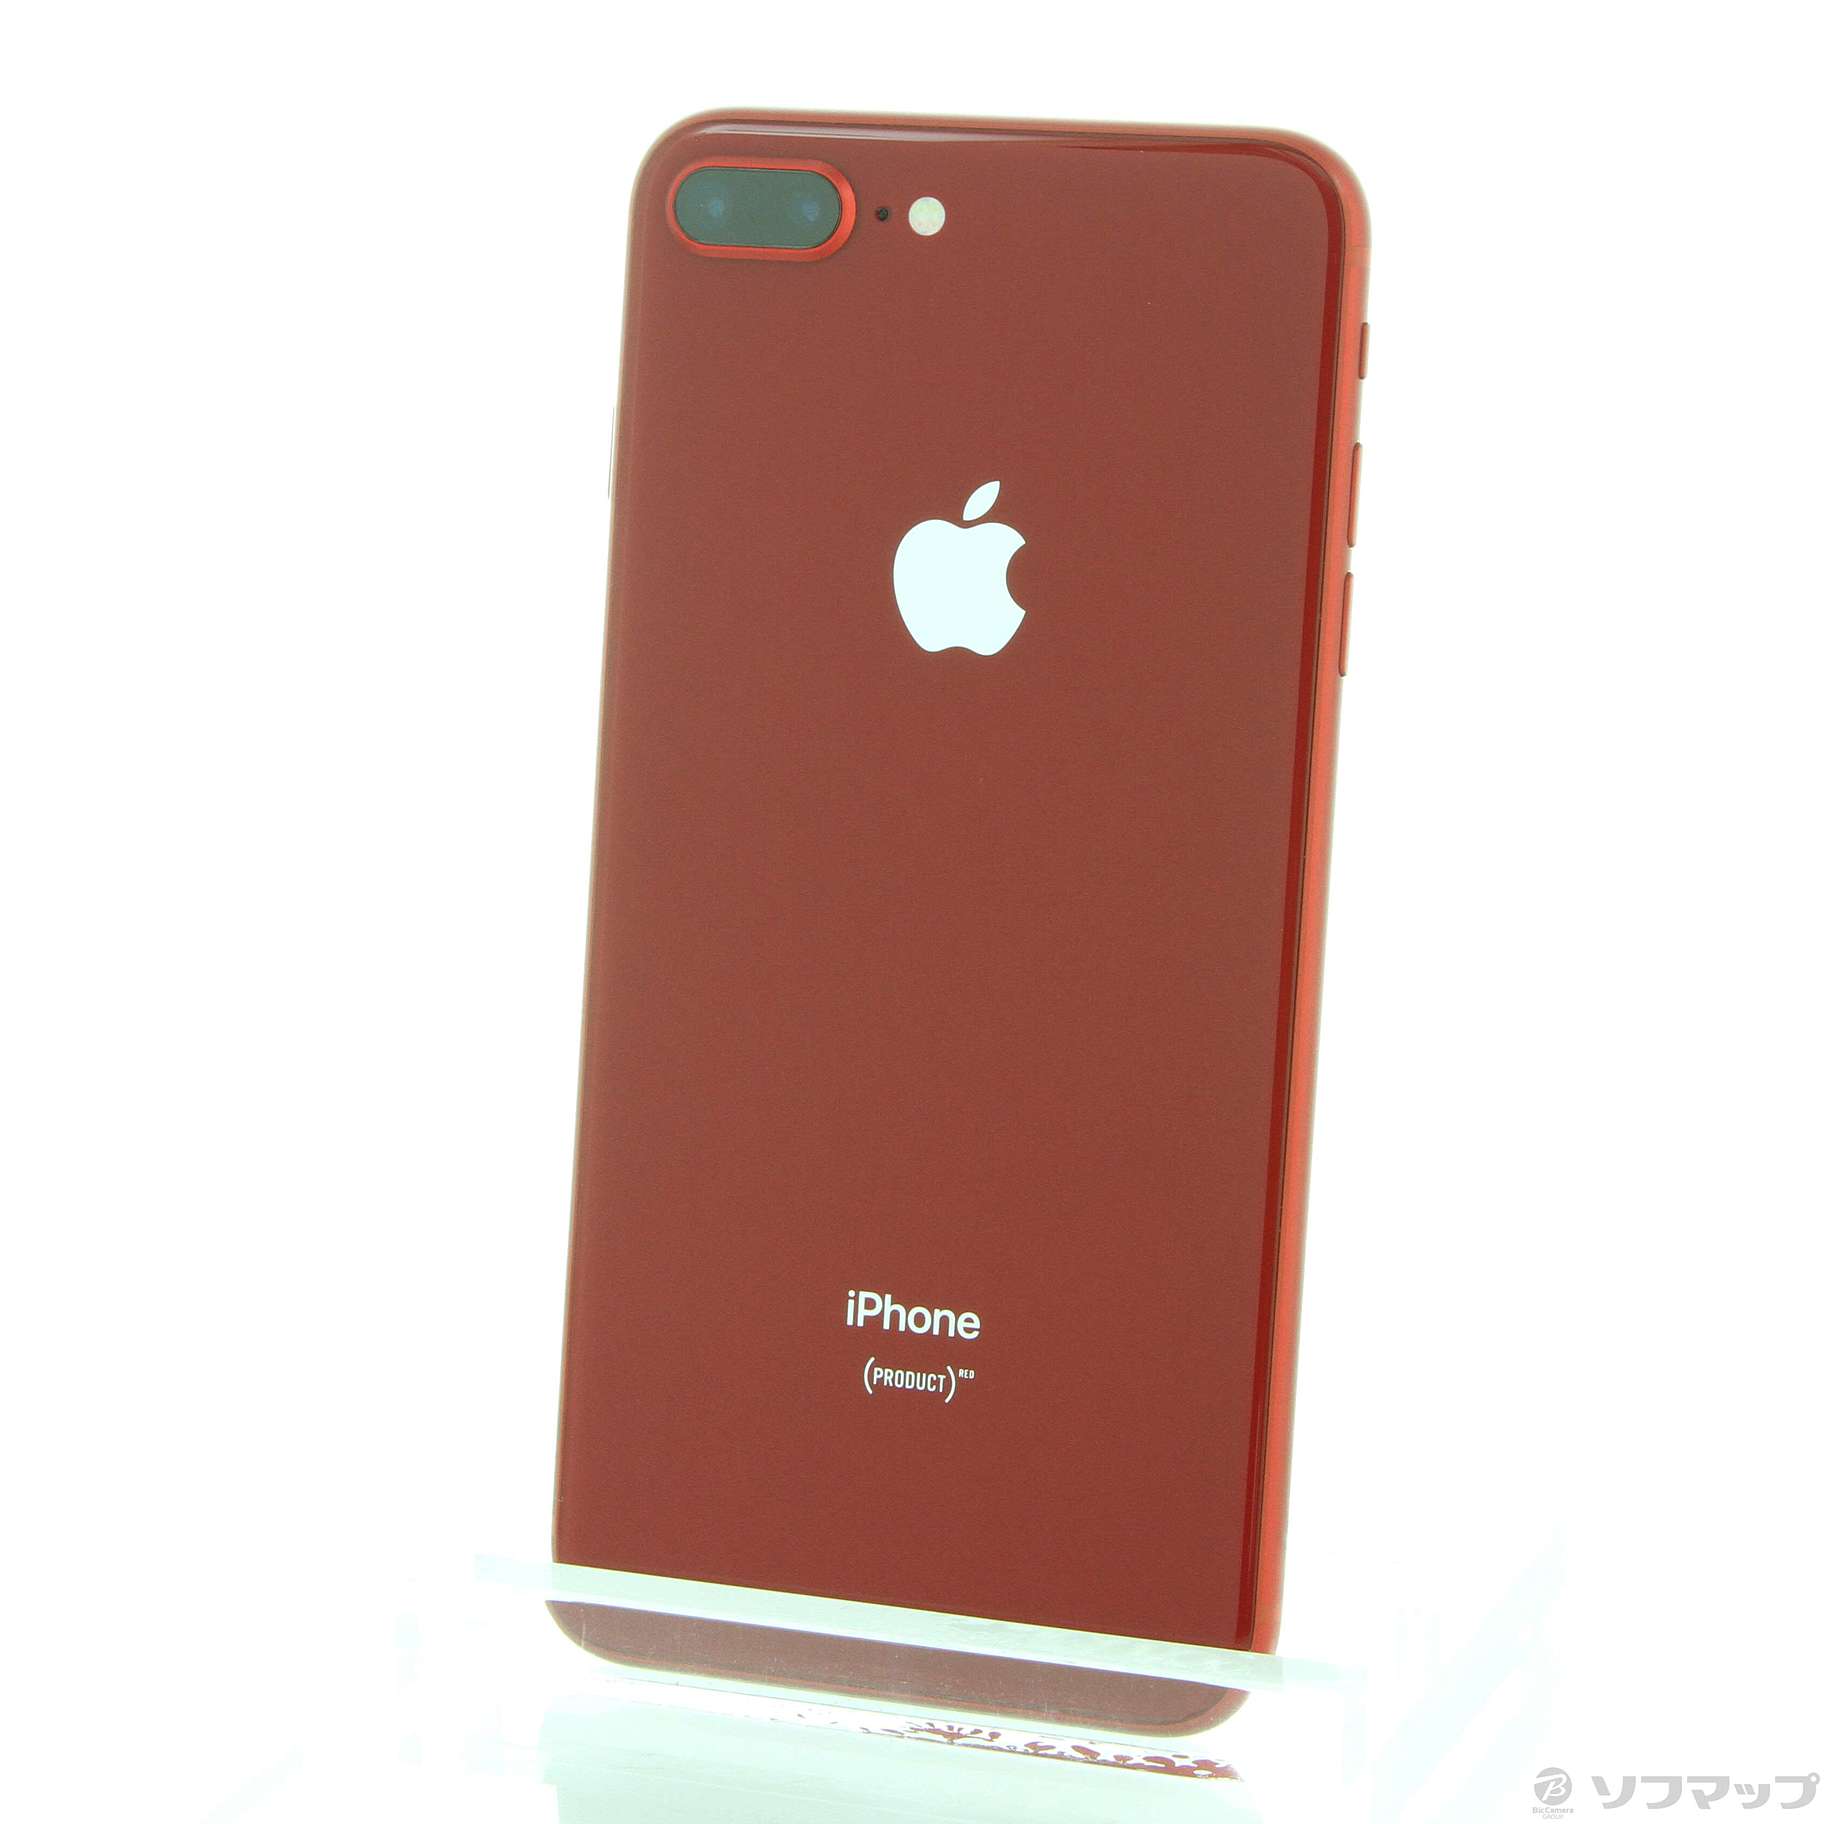 iPhone8 PRODUCT RED 64GB SIMフリー - スマートフォン本体